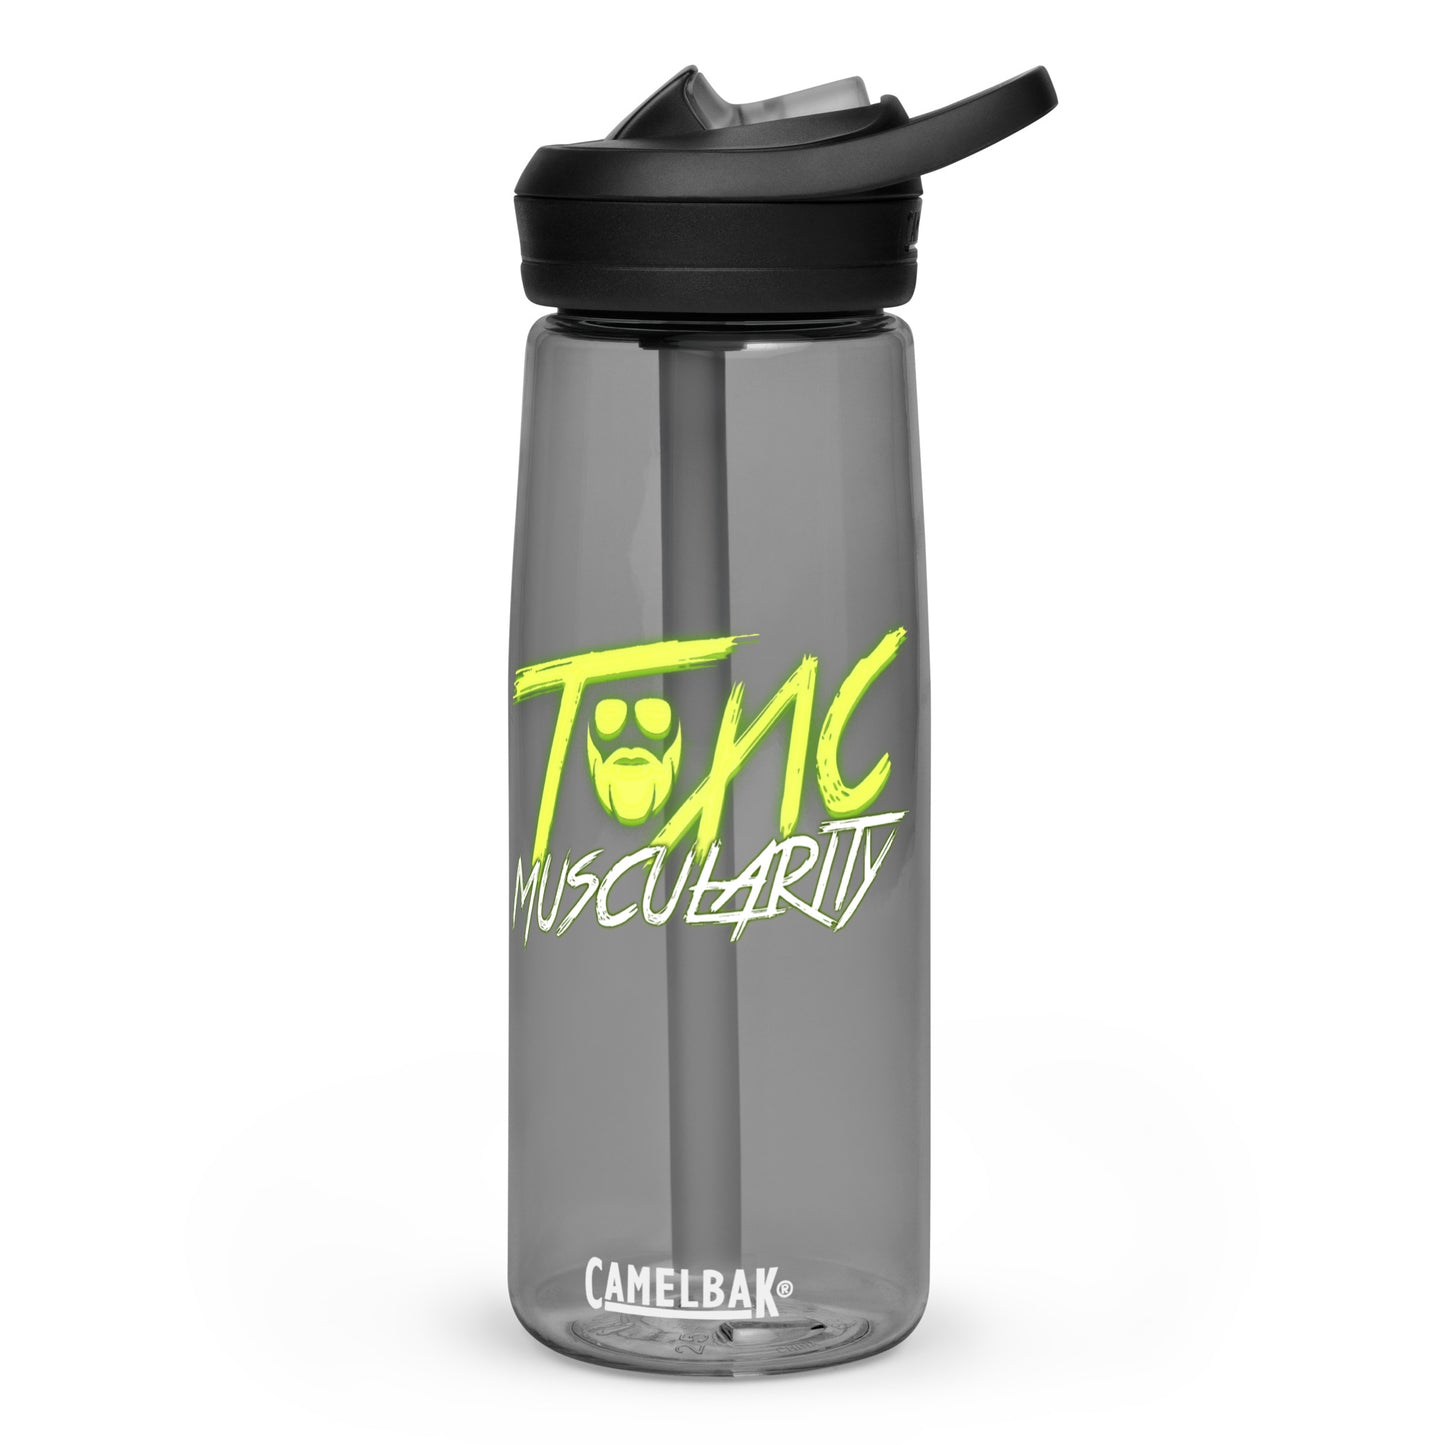 Toxic Muscularity Water Bottle